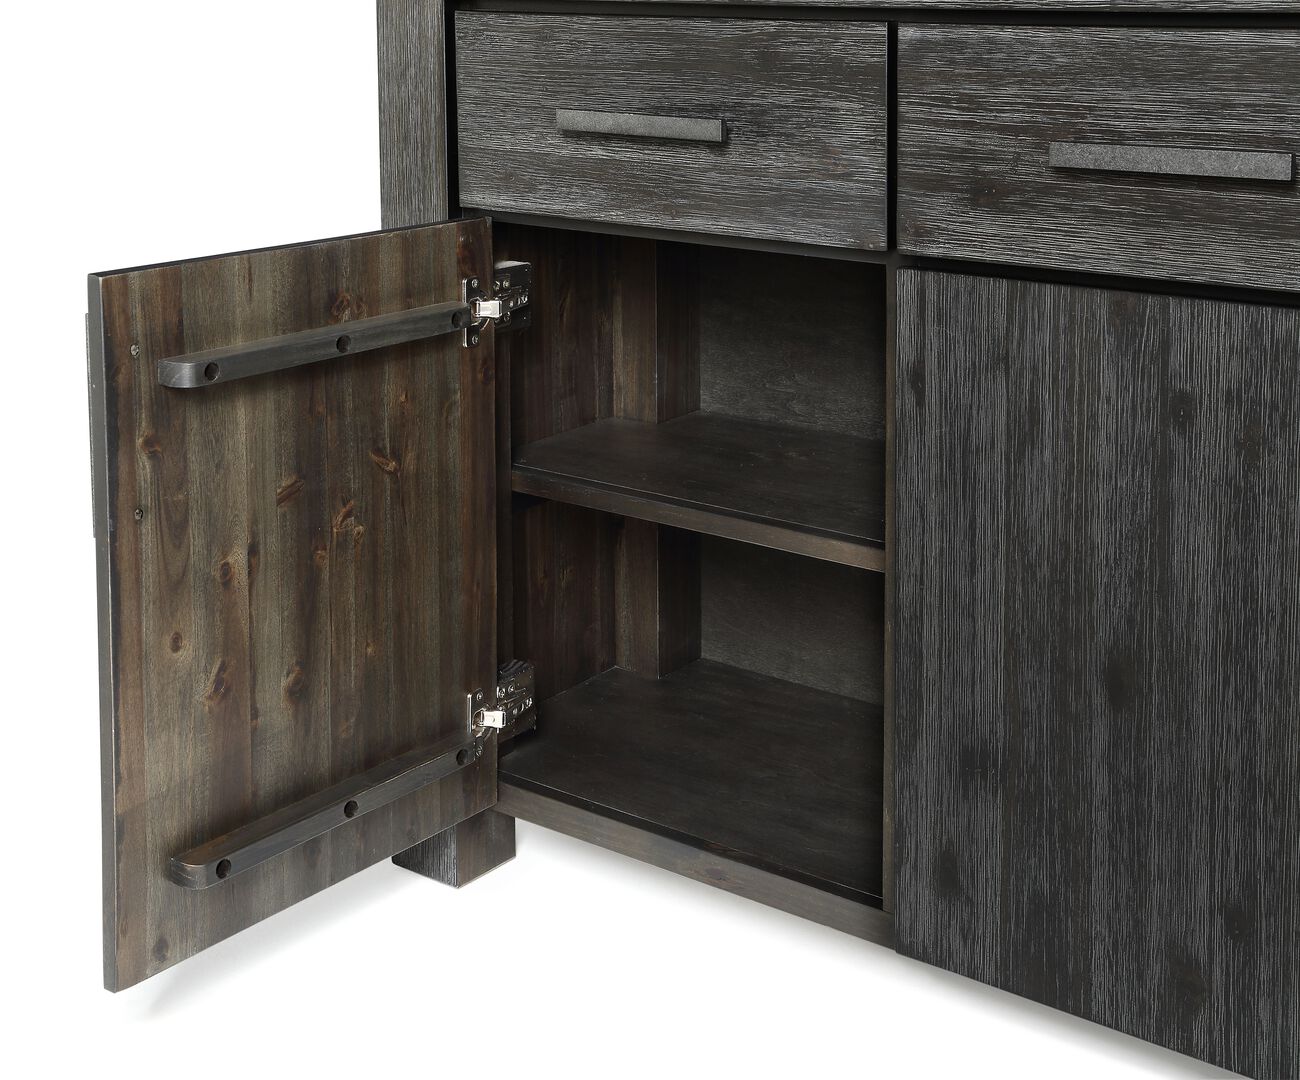 3 Drawer Wooden Sideboard with 3 Door Cabinets, Dark Gray